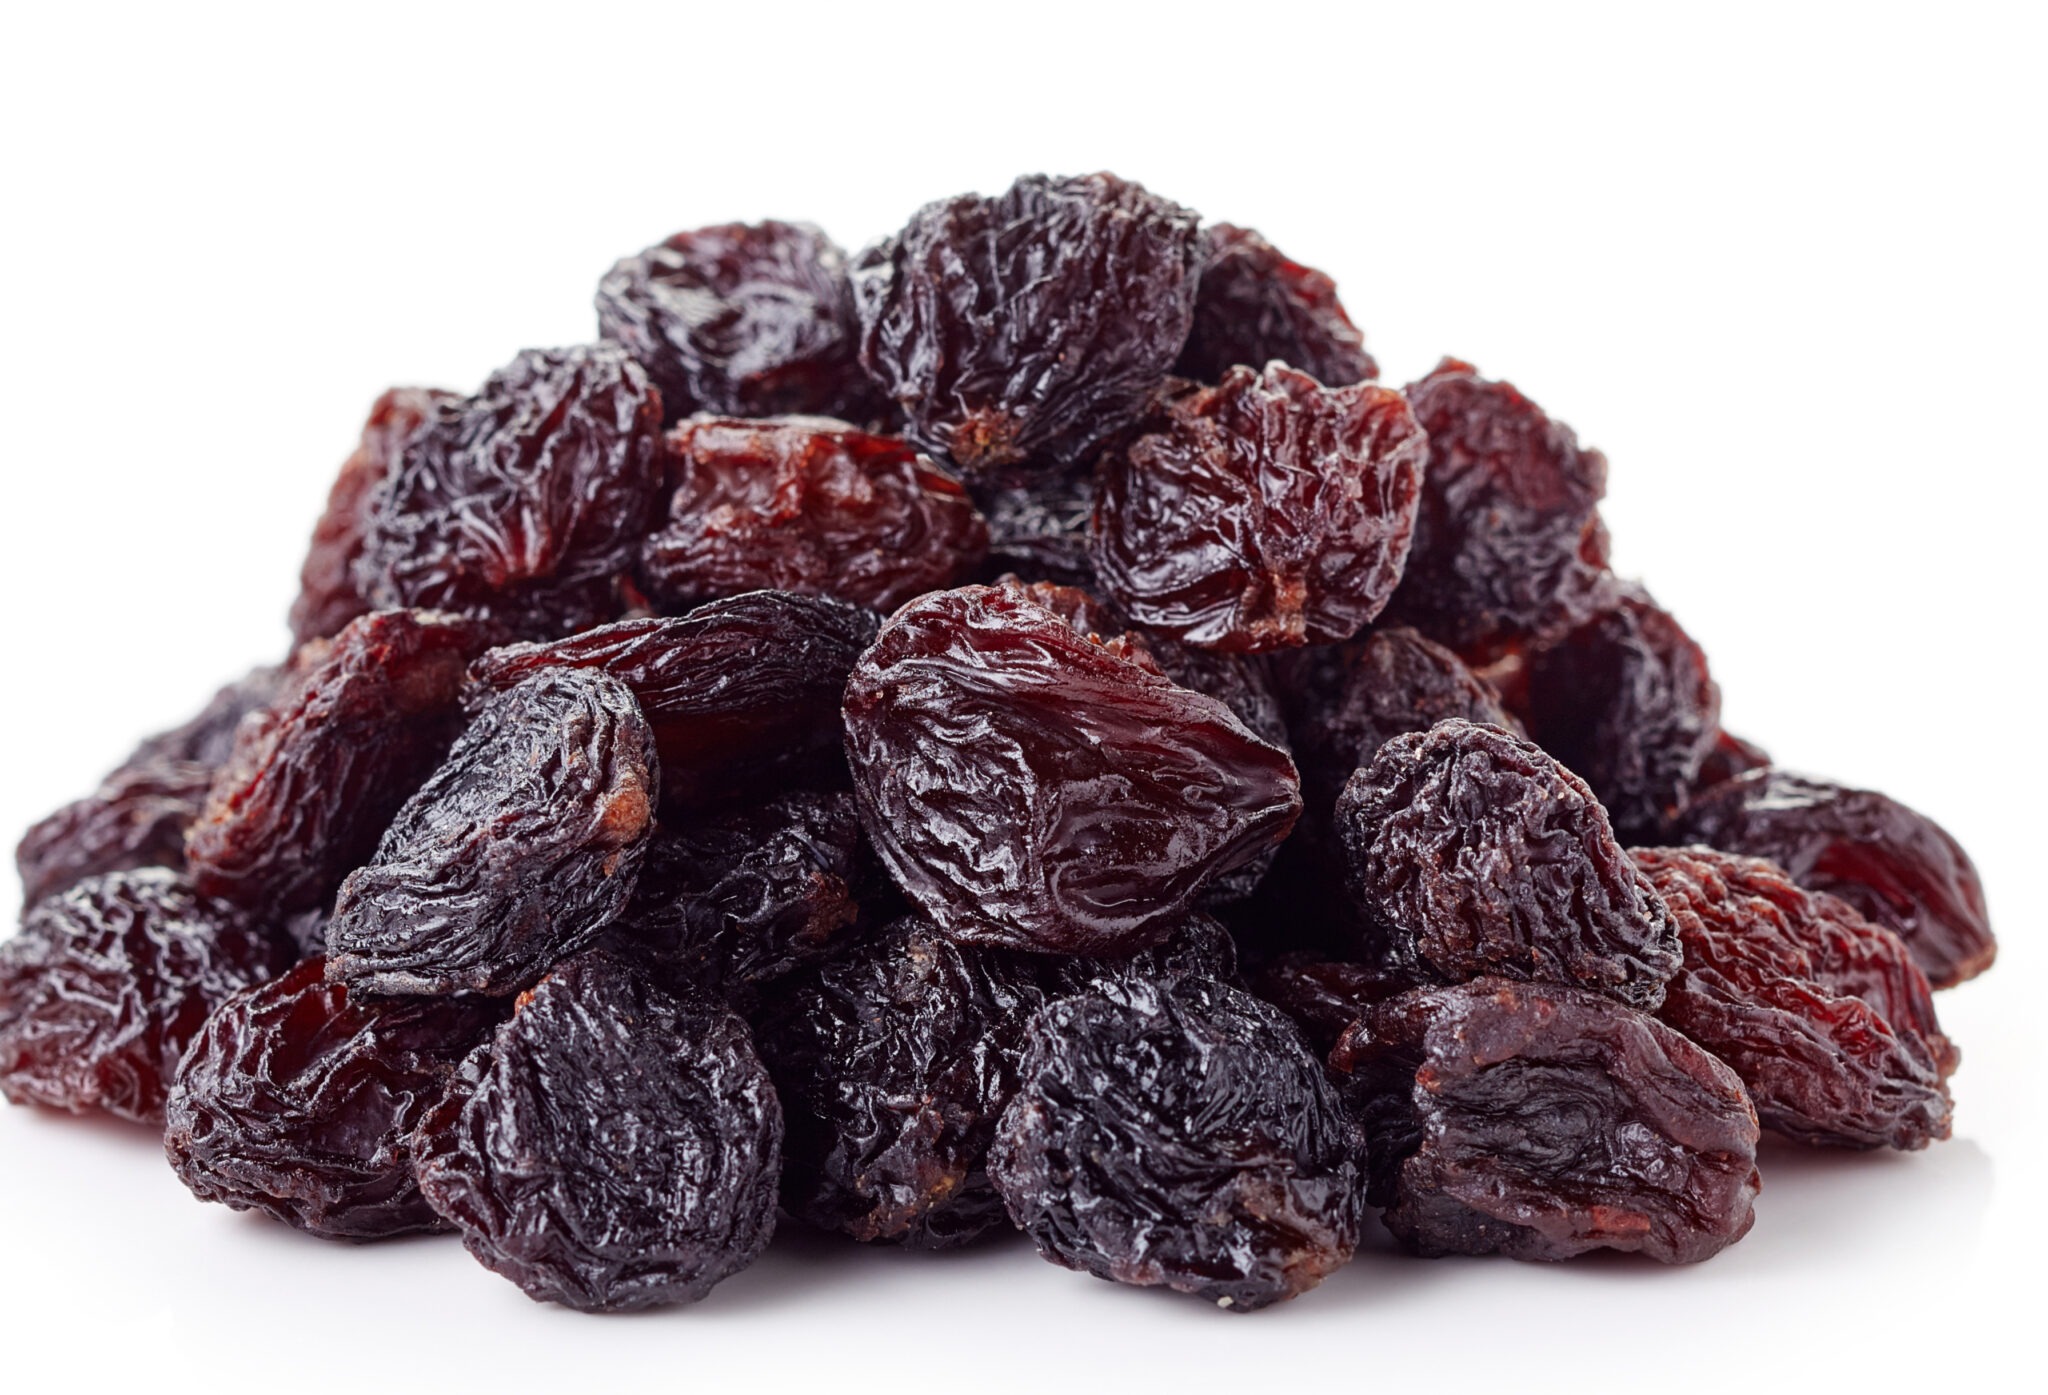 black raisins benefits